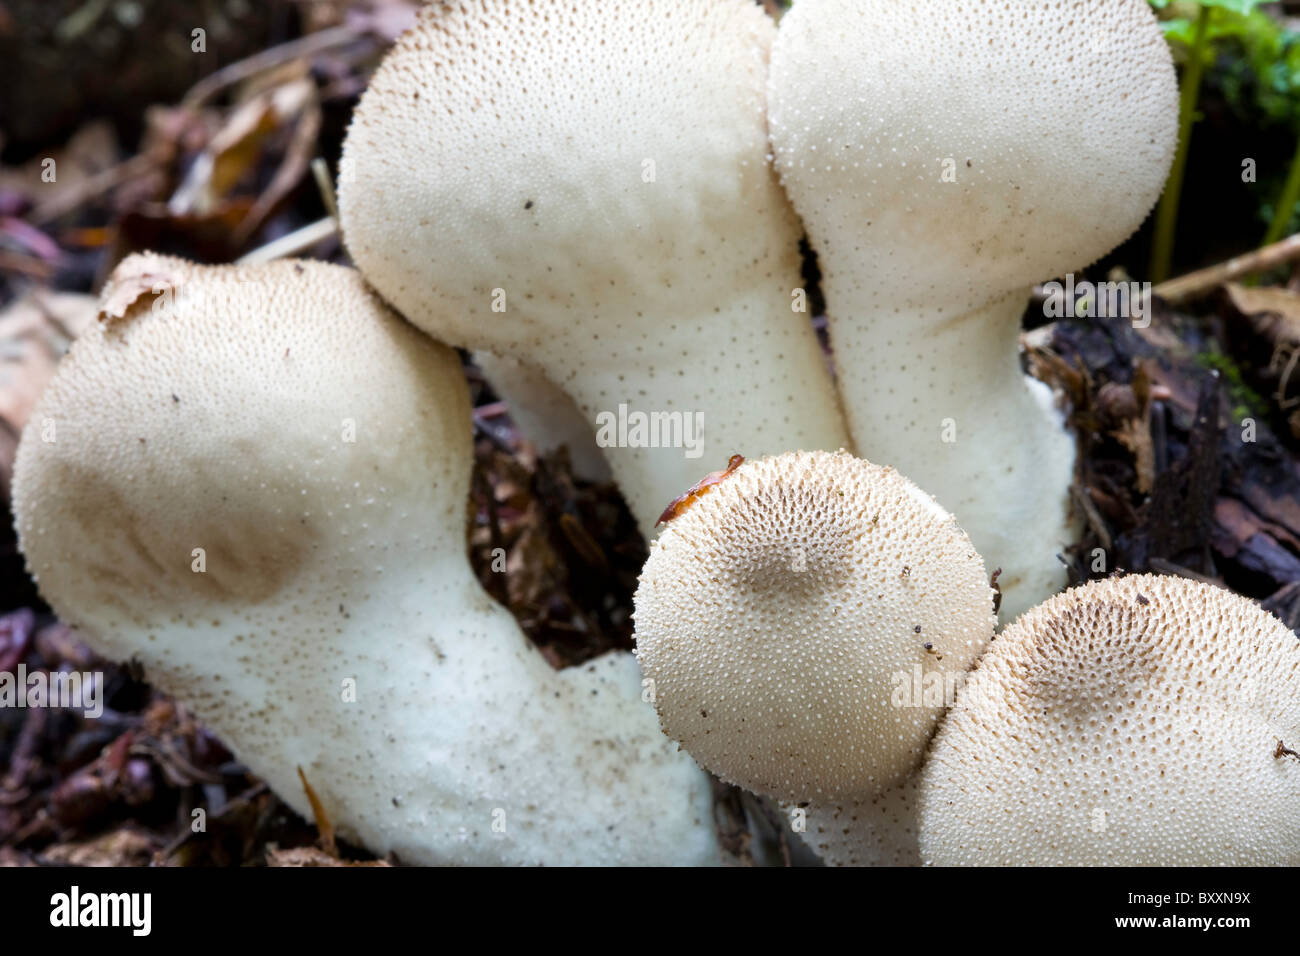 Tumbling Puffball (Bovista Plumbea) ein Speisepilz im Oregon Wald wild wächst. USA Stockfoto